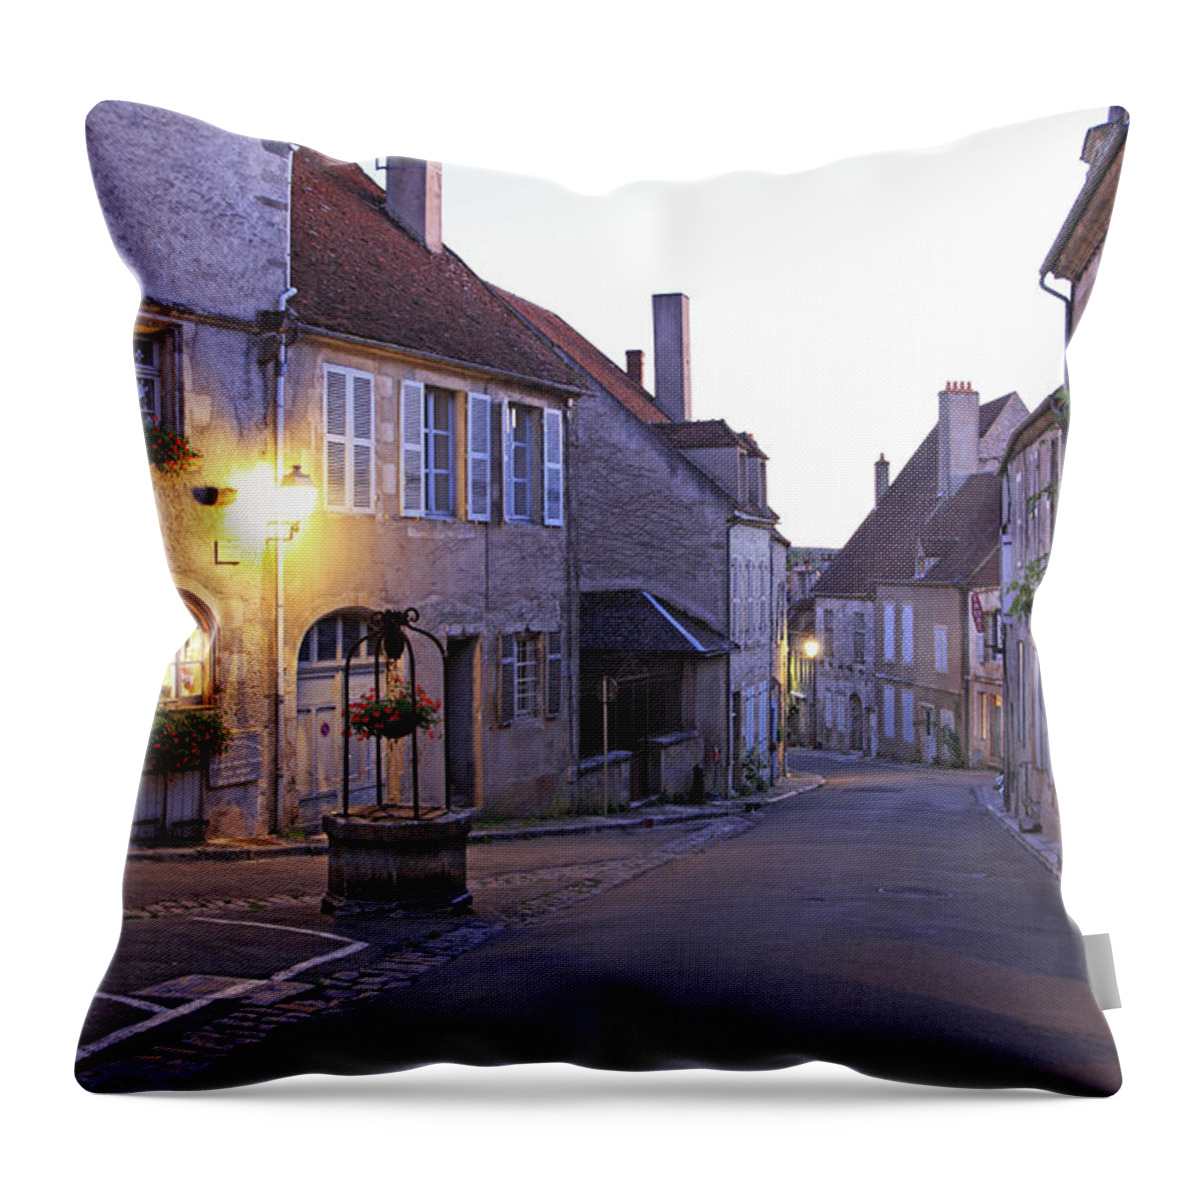 Pilgrimage Throw Pillow featuring the photograph France, Vézelay #1 by Hiroshi Higuchi